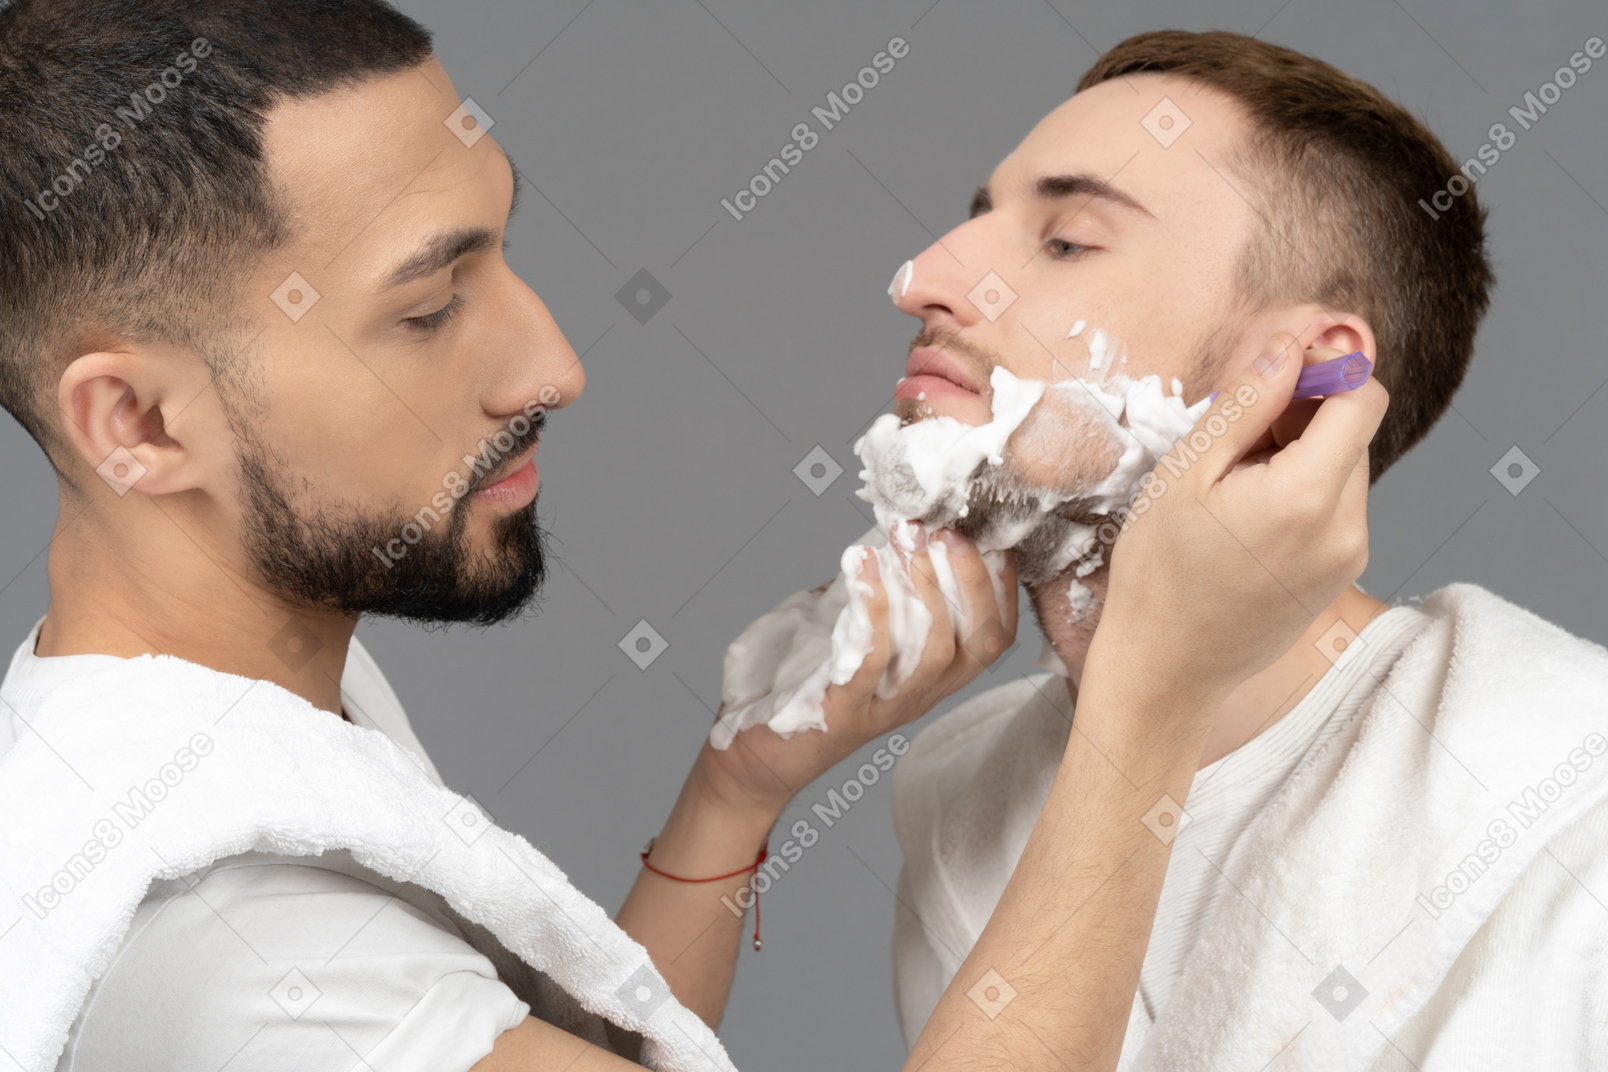 Close-up of a man shaving partner's face